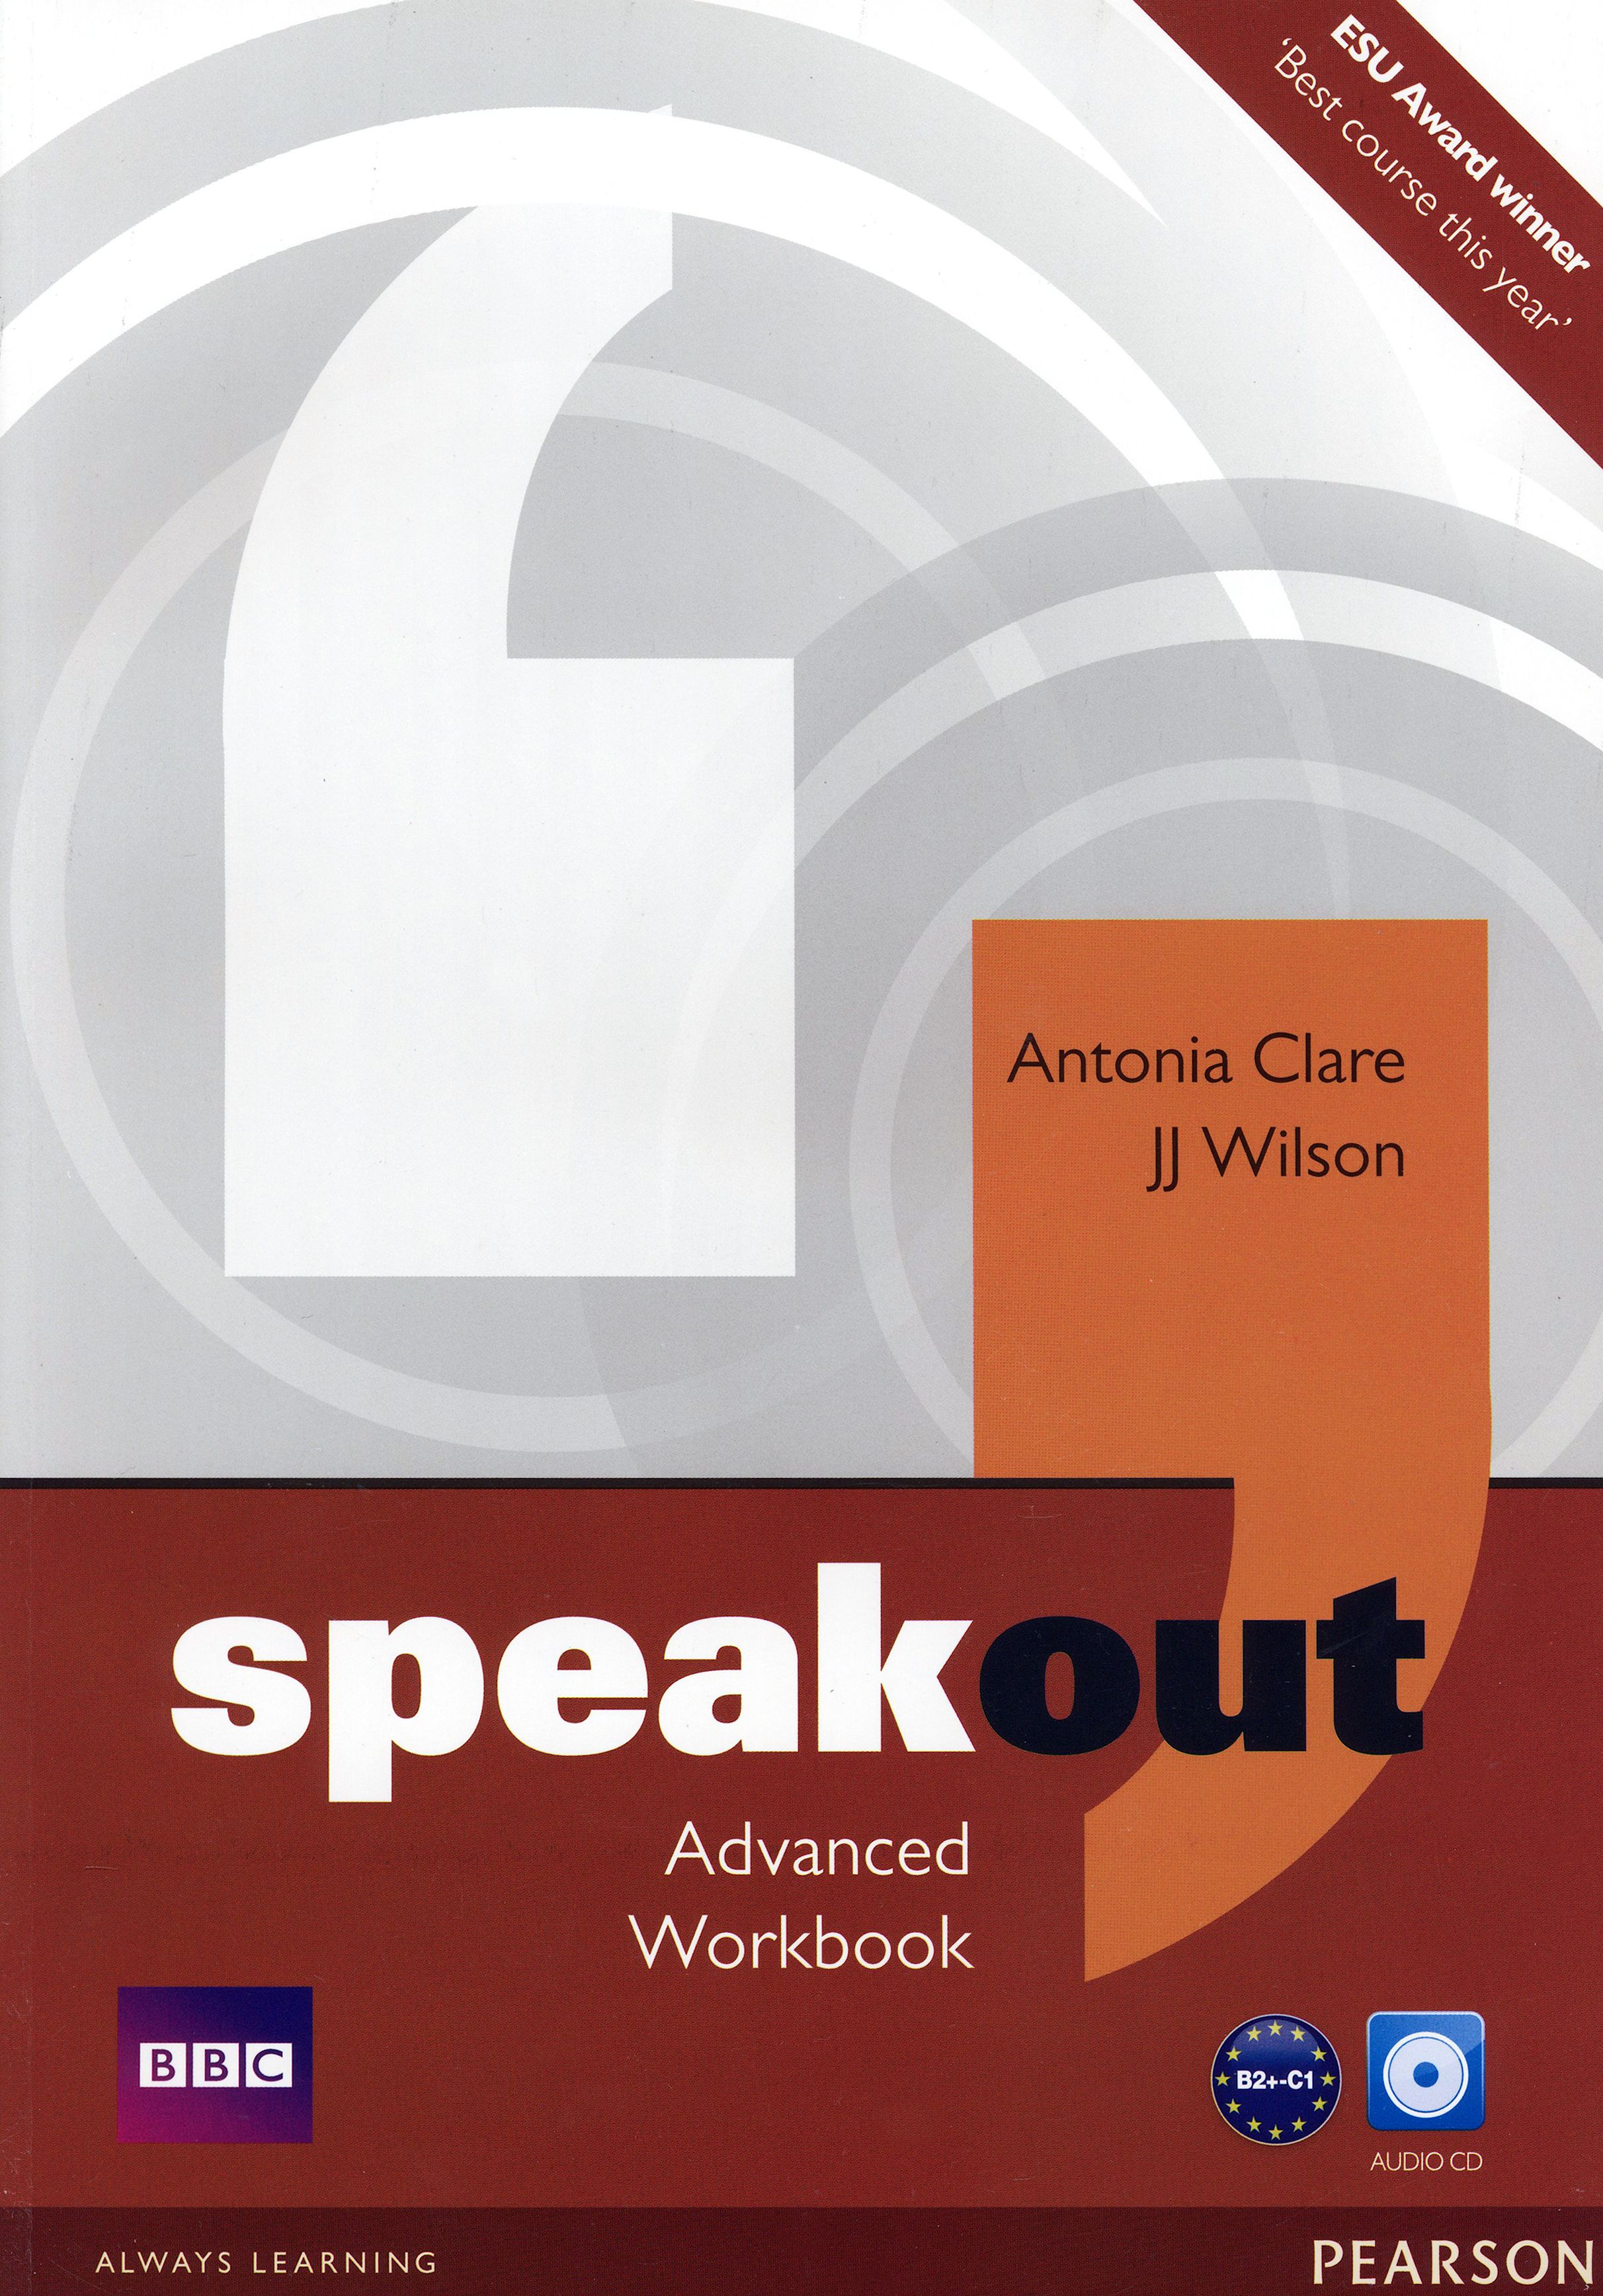 Speak out elementary. Speakout Elementary Workbook with Key. Advanced Workbook. Advanced Workbook Keys. Speakout Elementary.